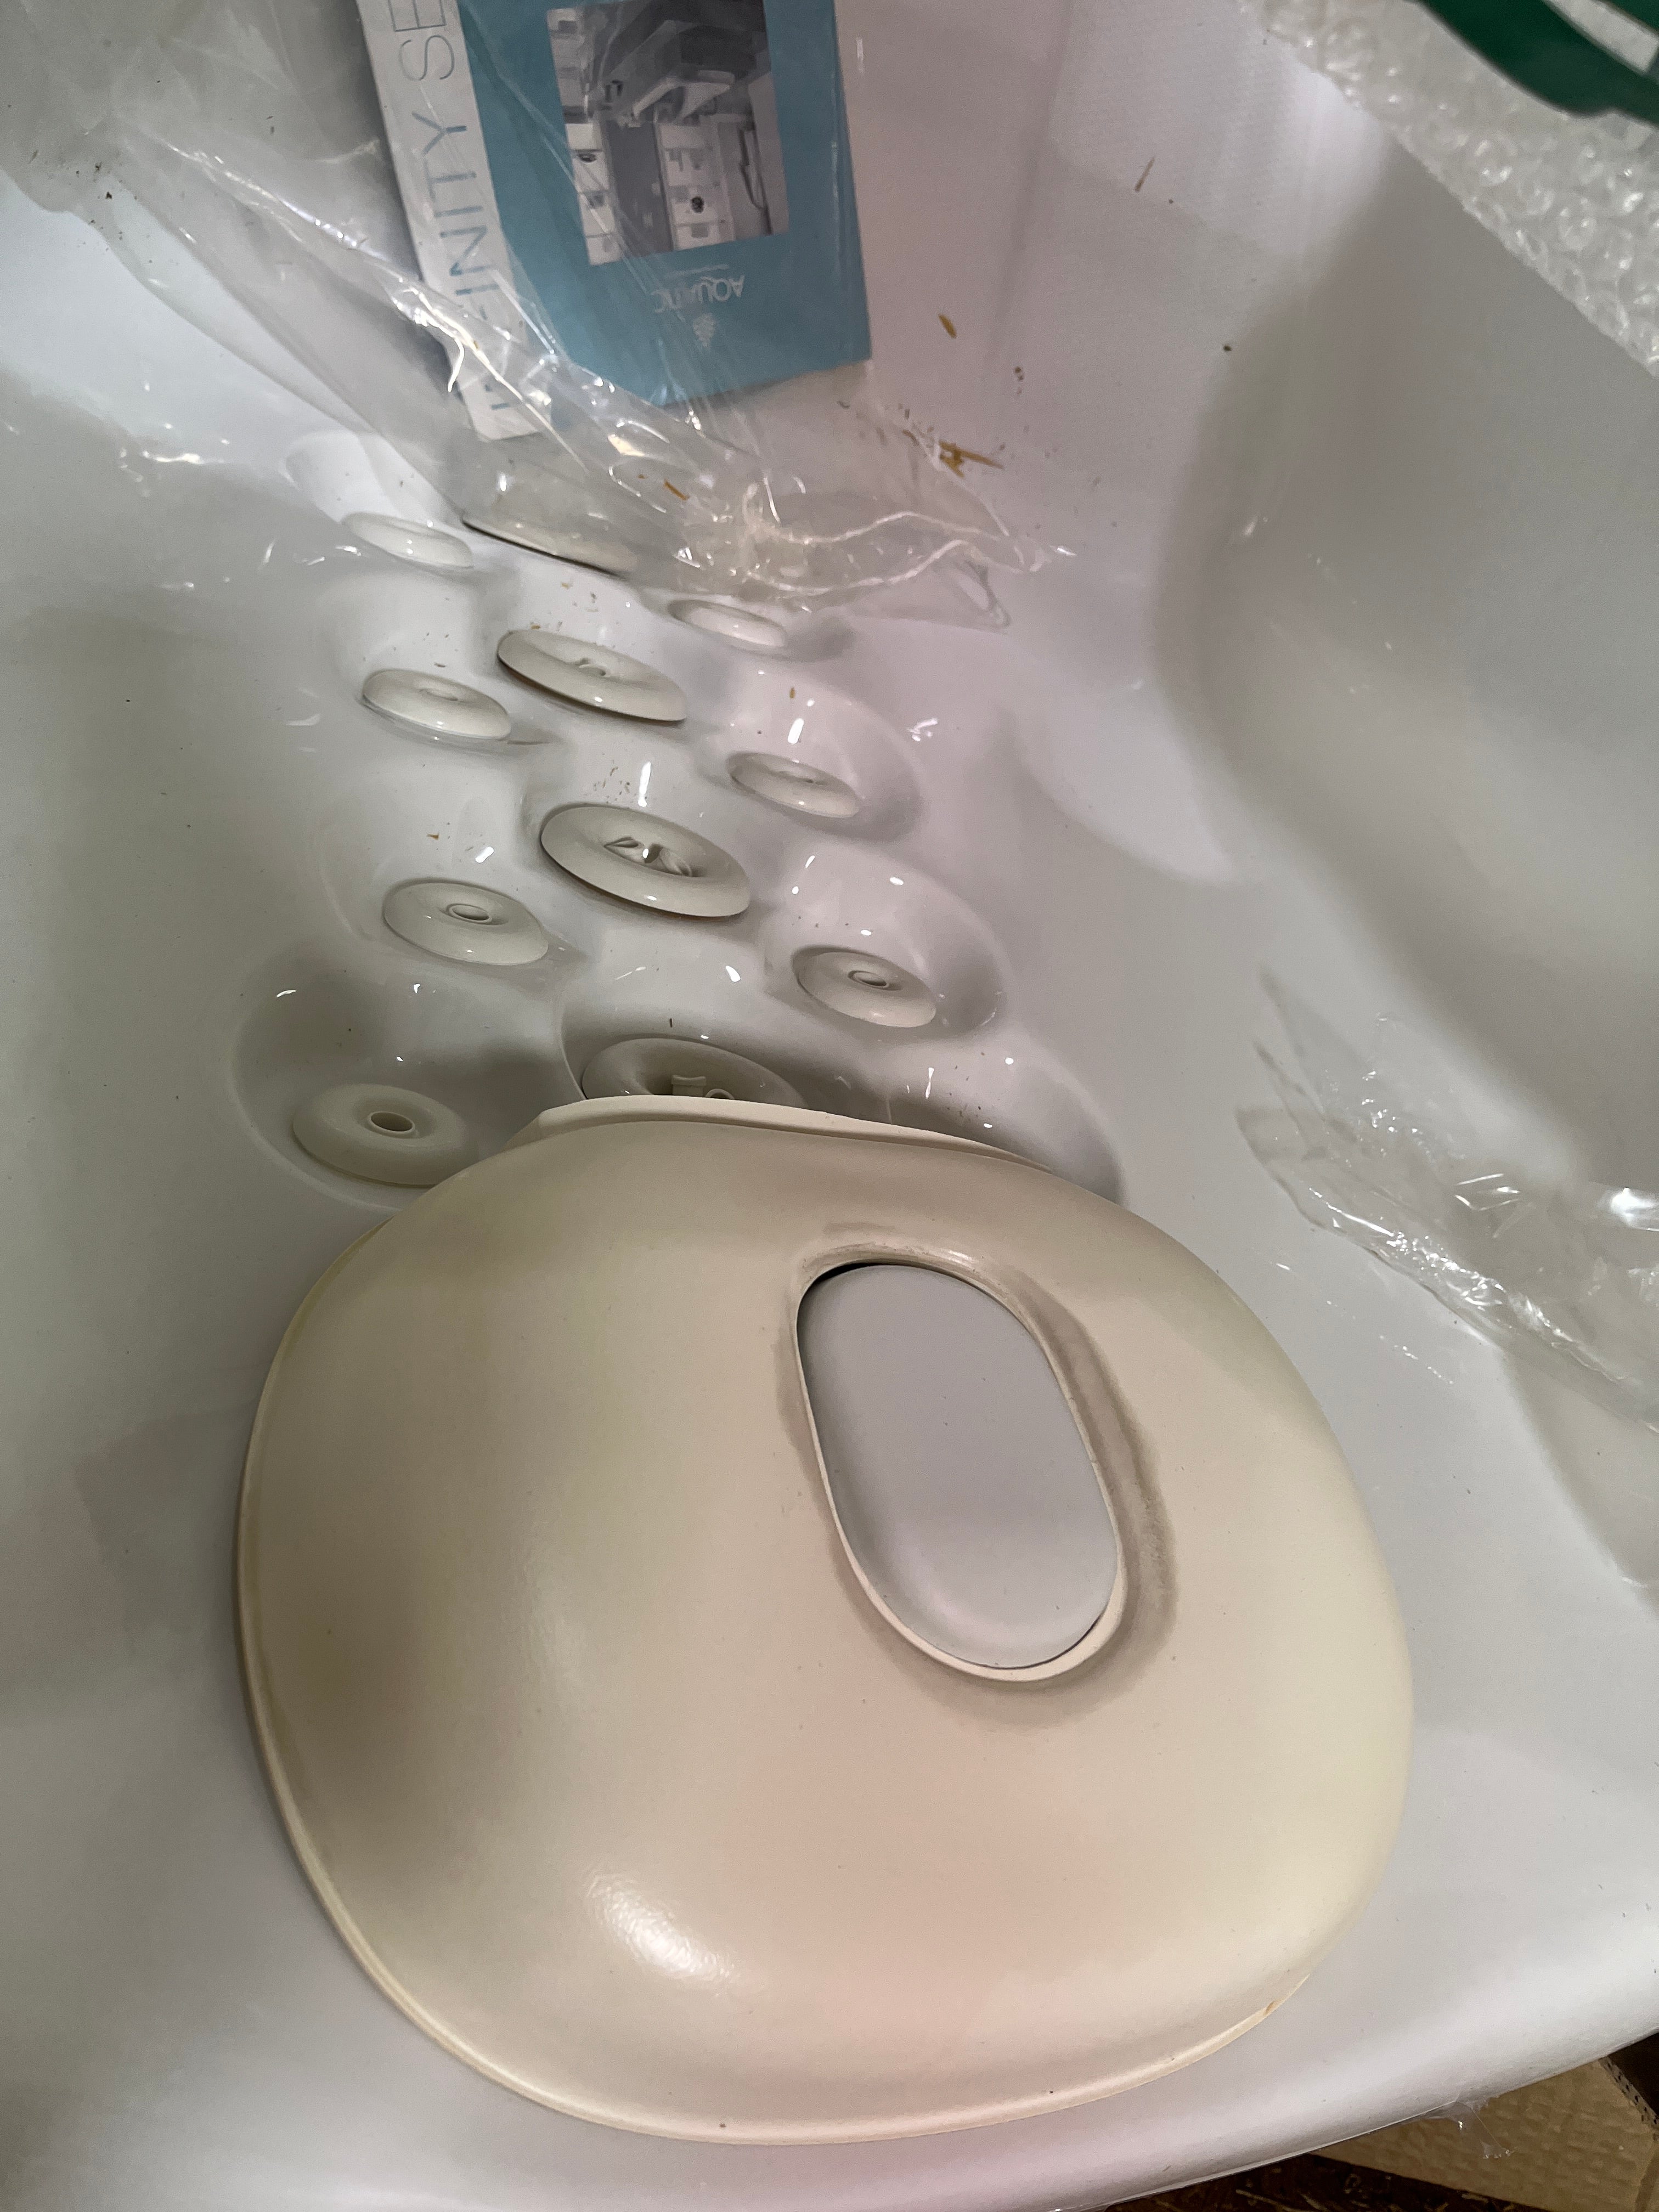 Aquatic Infinity 7 Oval Drop-In Air Bath/Whirlpool Bathtub with Heater in White